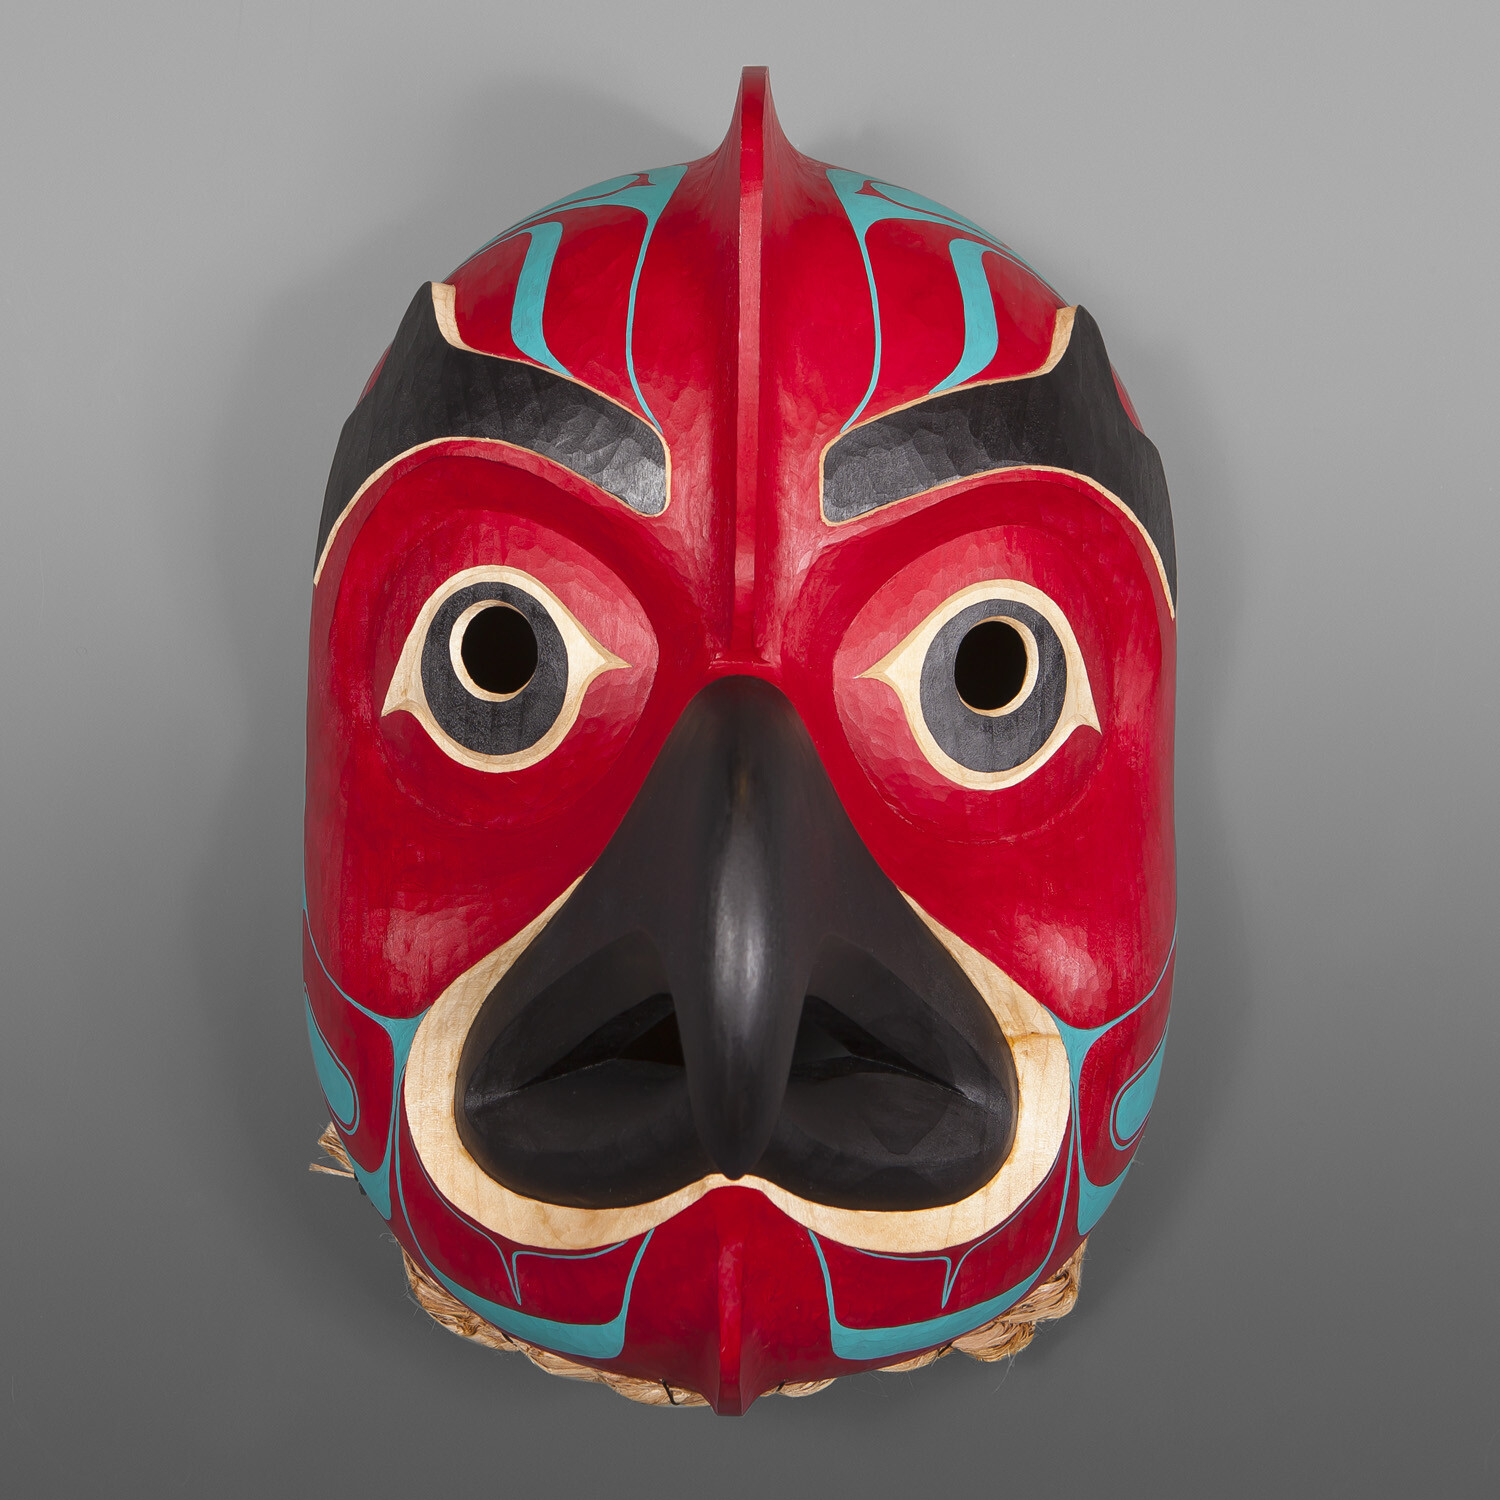 Octopus Mask
Nathan Wilson
HaislaRed Cedar, Paint12” x 8 ½” x 7 ½”
$3600
